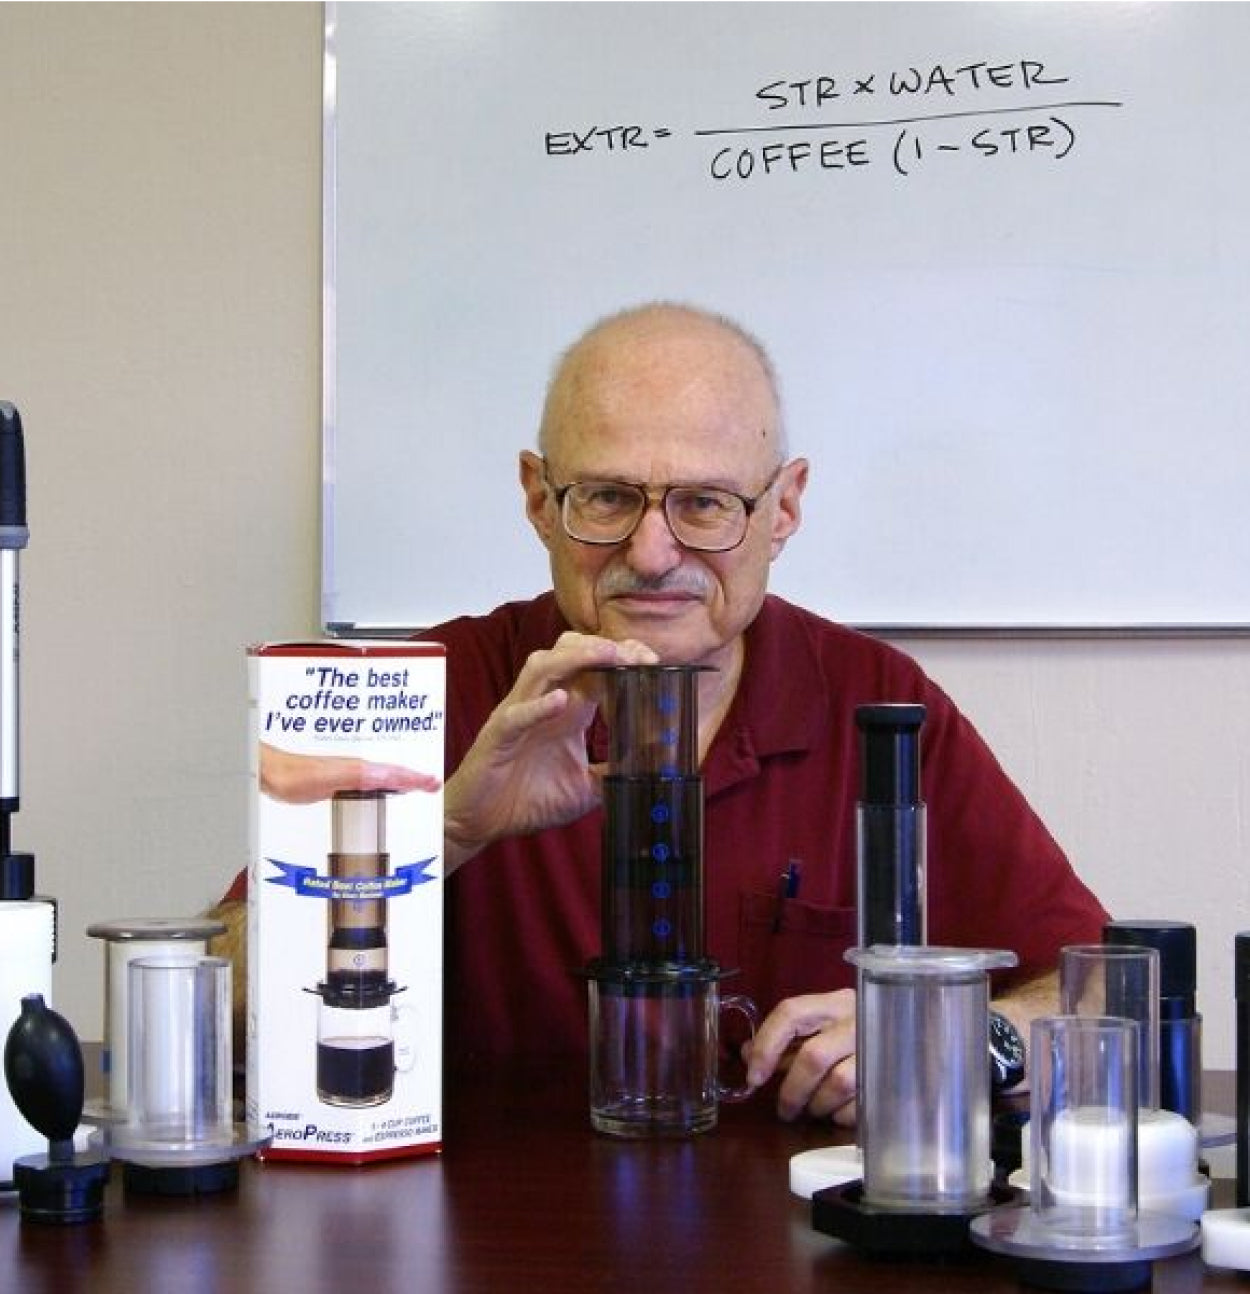 AeroPress inventor Alan Adler sitting among early prototypes of the AeroPress Original coffee maker